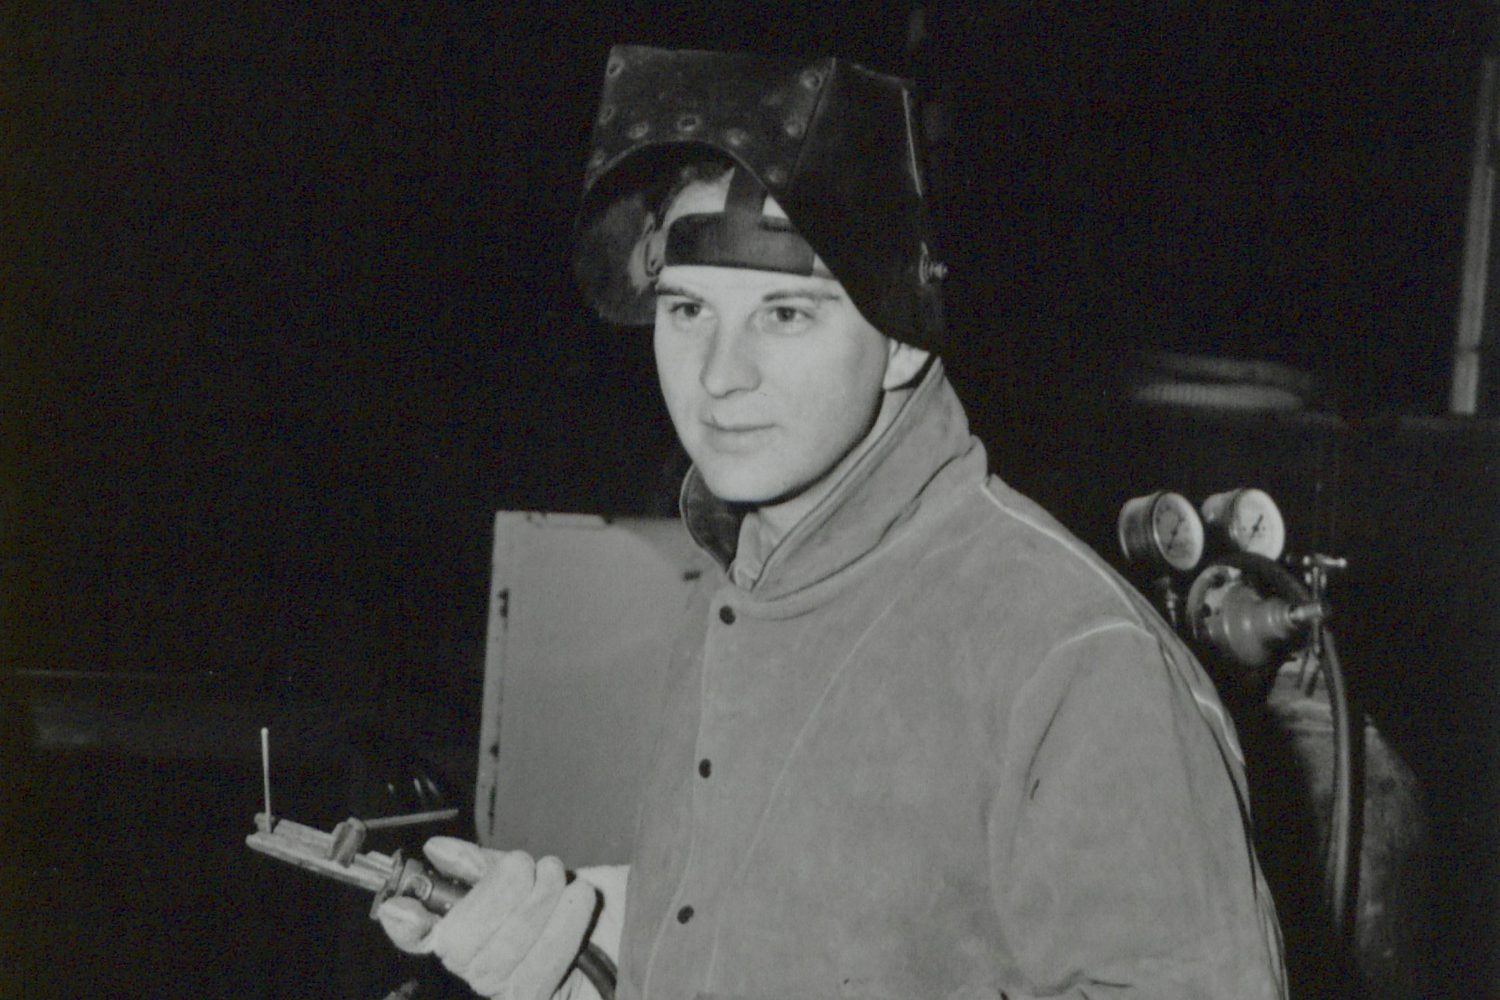 Photo of Harvey Zieber, Hewlett-Packard's first employee, with a welding helmet and blow torch.